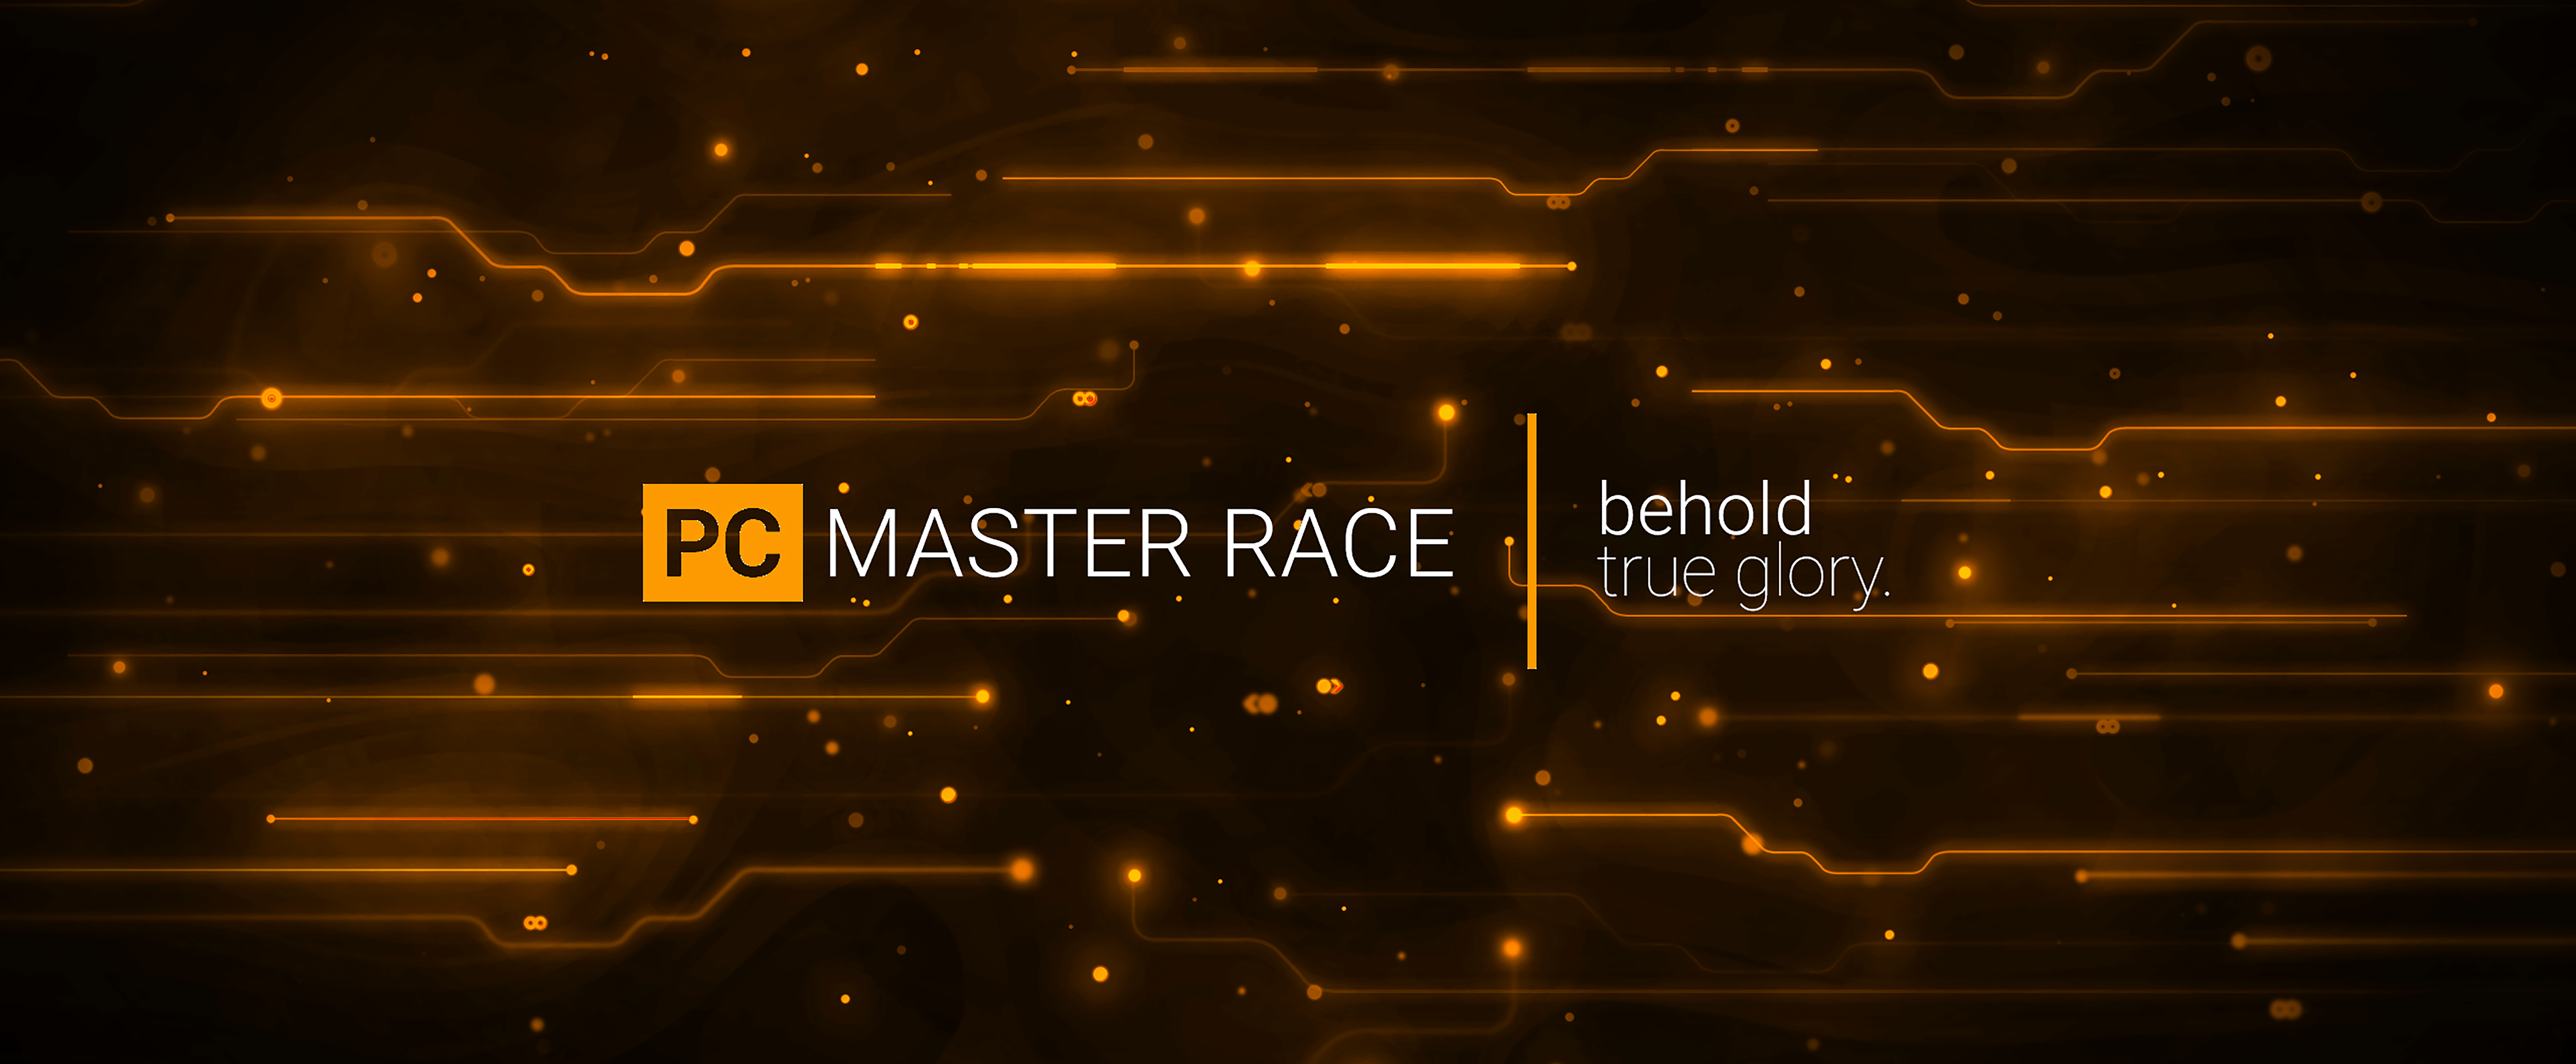 Pc Master Race 1920x1080p - HD Wallpaper 